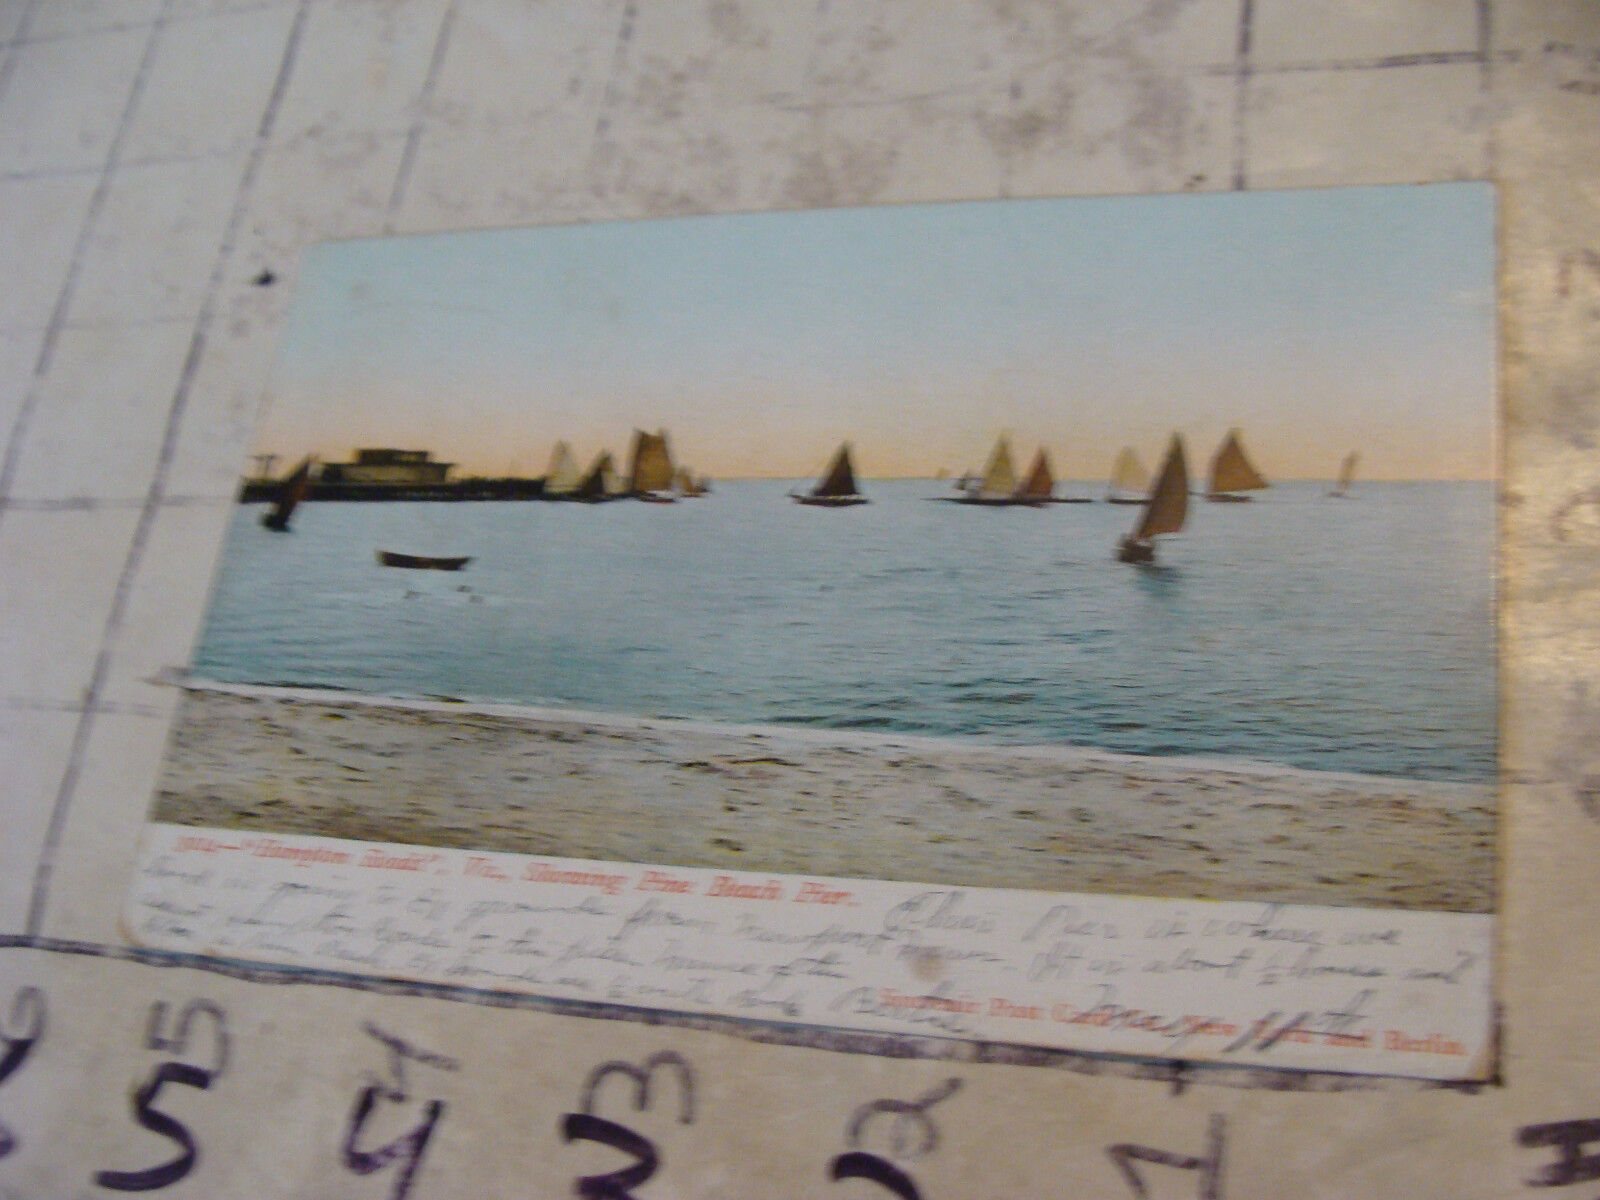 Orig Vint post card 1907 HAMPTON ROADS VA, showing pine beach pier, boats